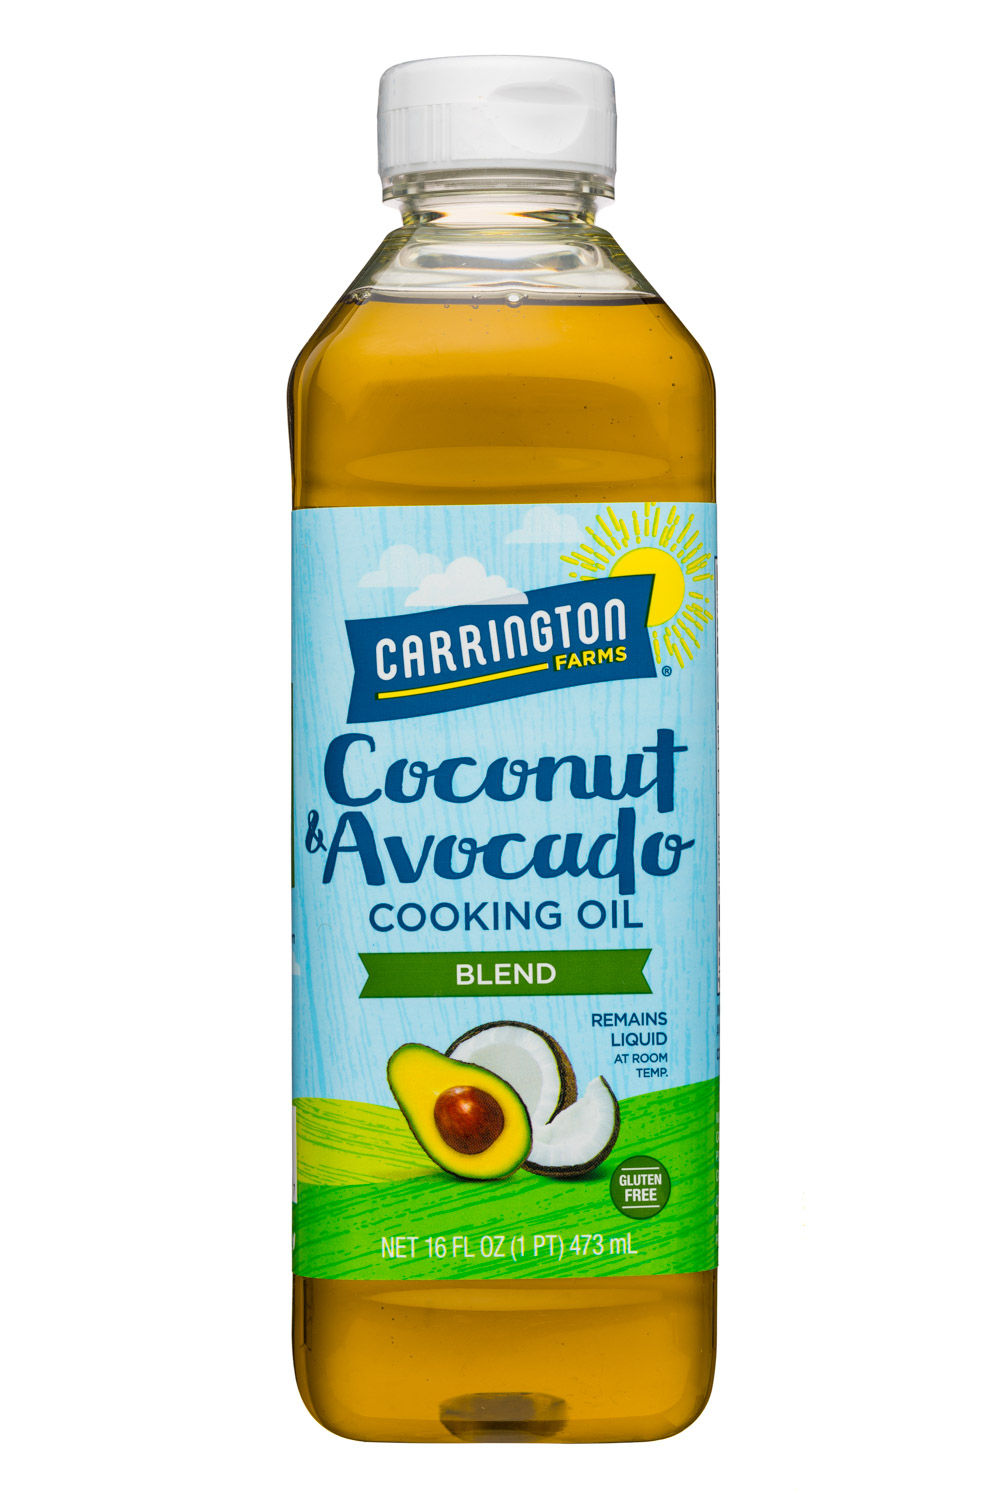 Coconut & Avocado Oil